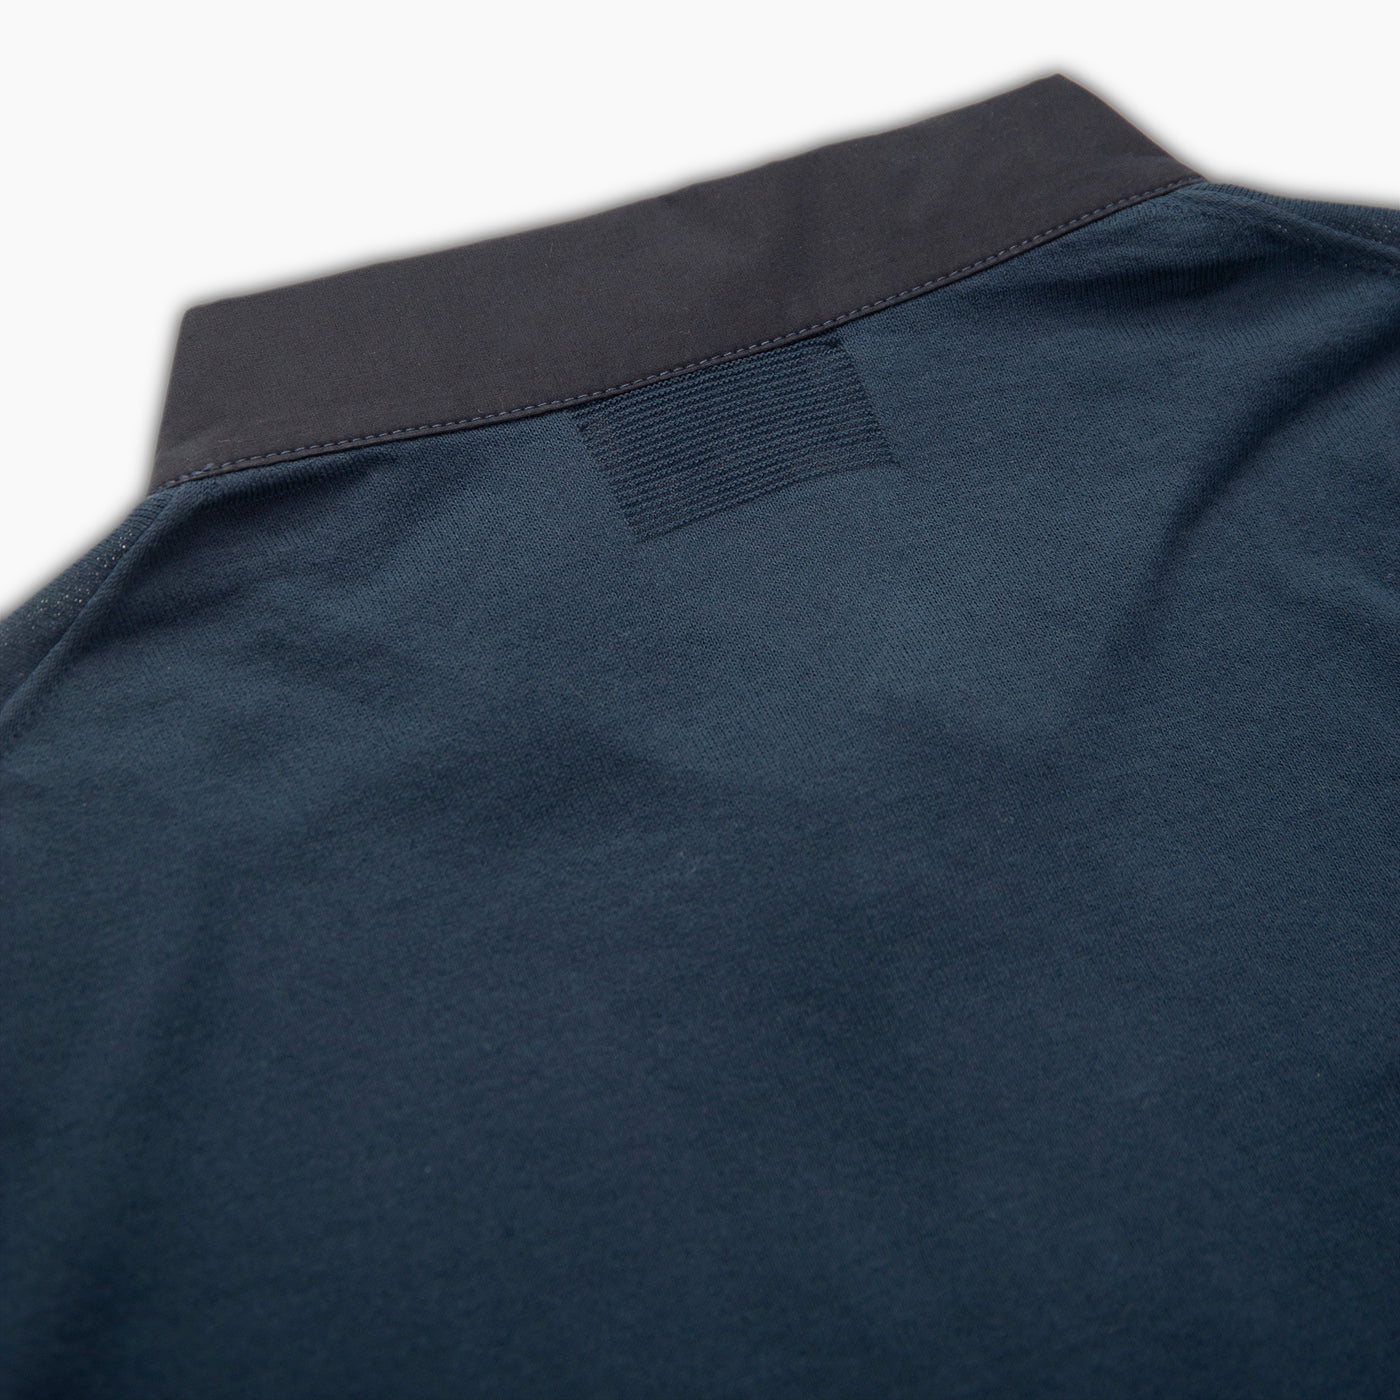 Martino short-sleeved knitted polo with KA/NOA shirt popeline collar